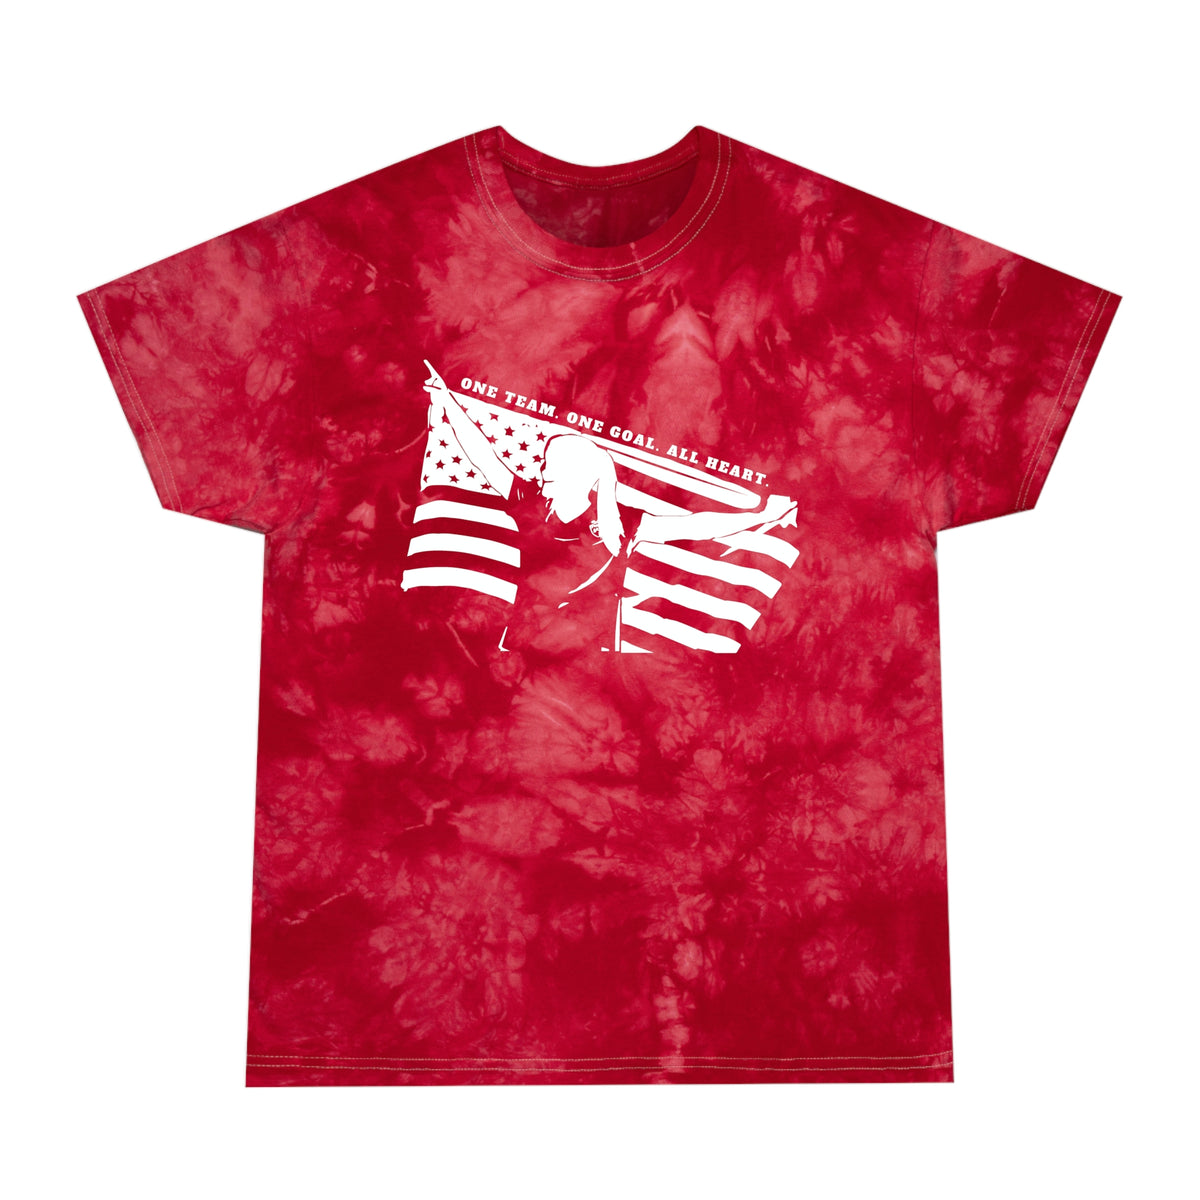 USA All Heart TieDye Adult Unisex T-Shirt